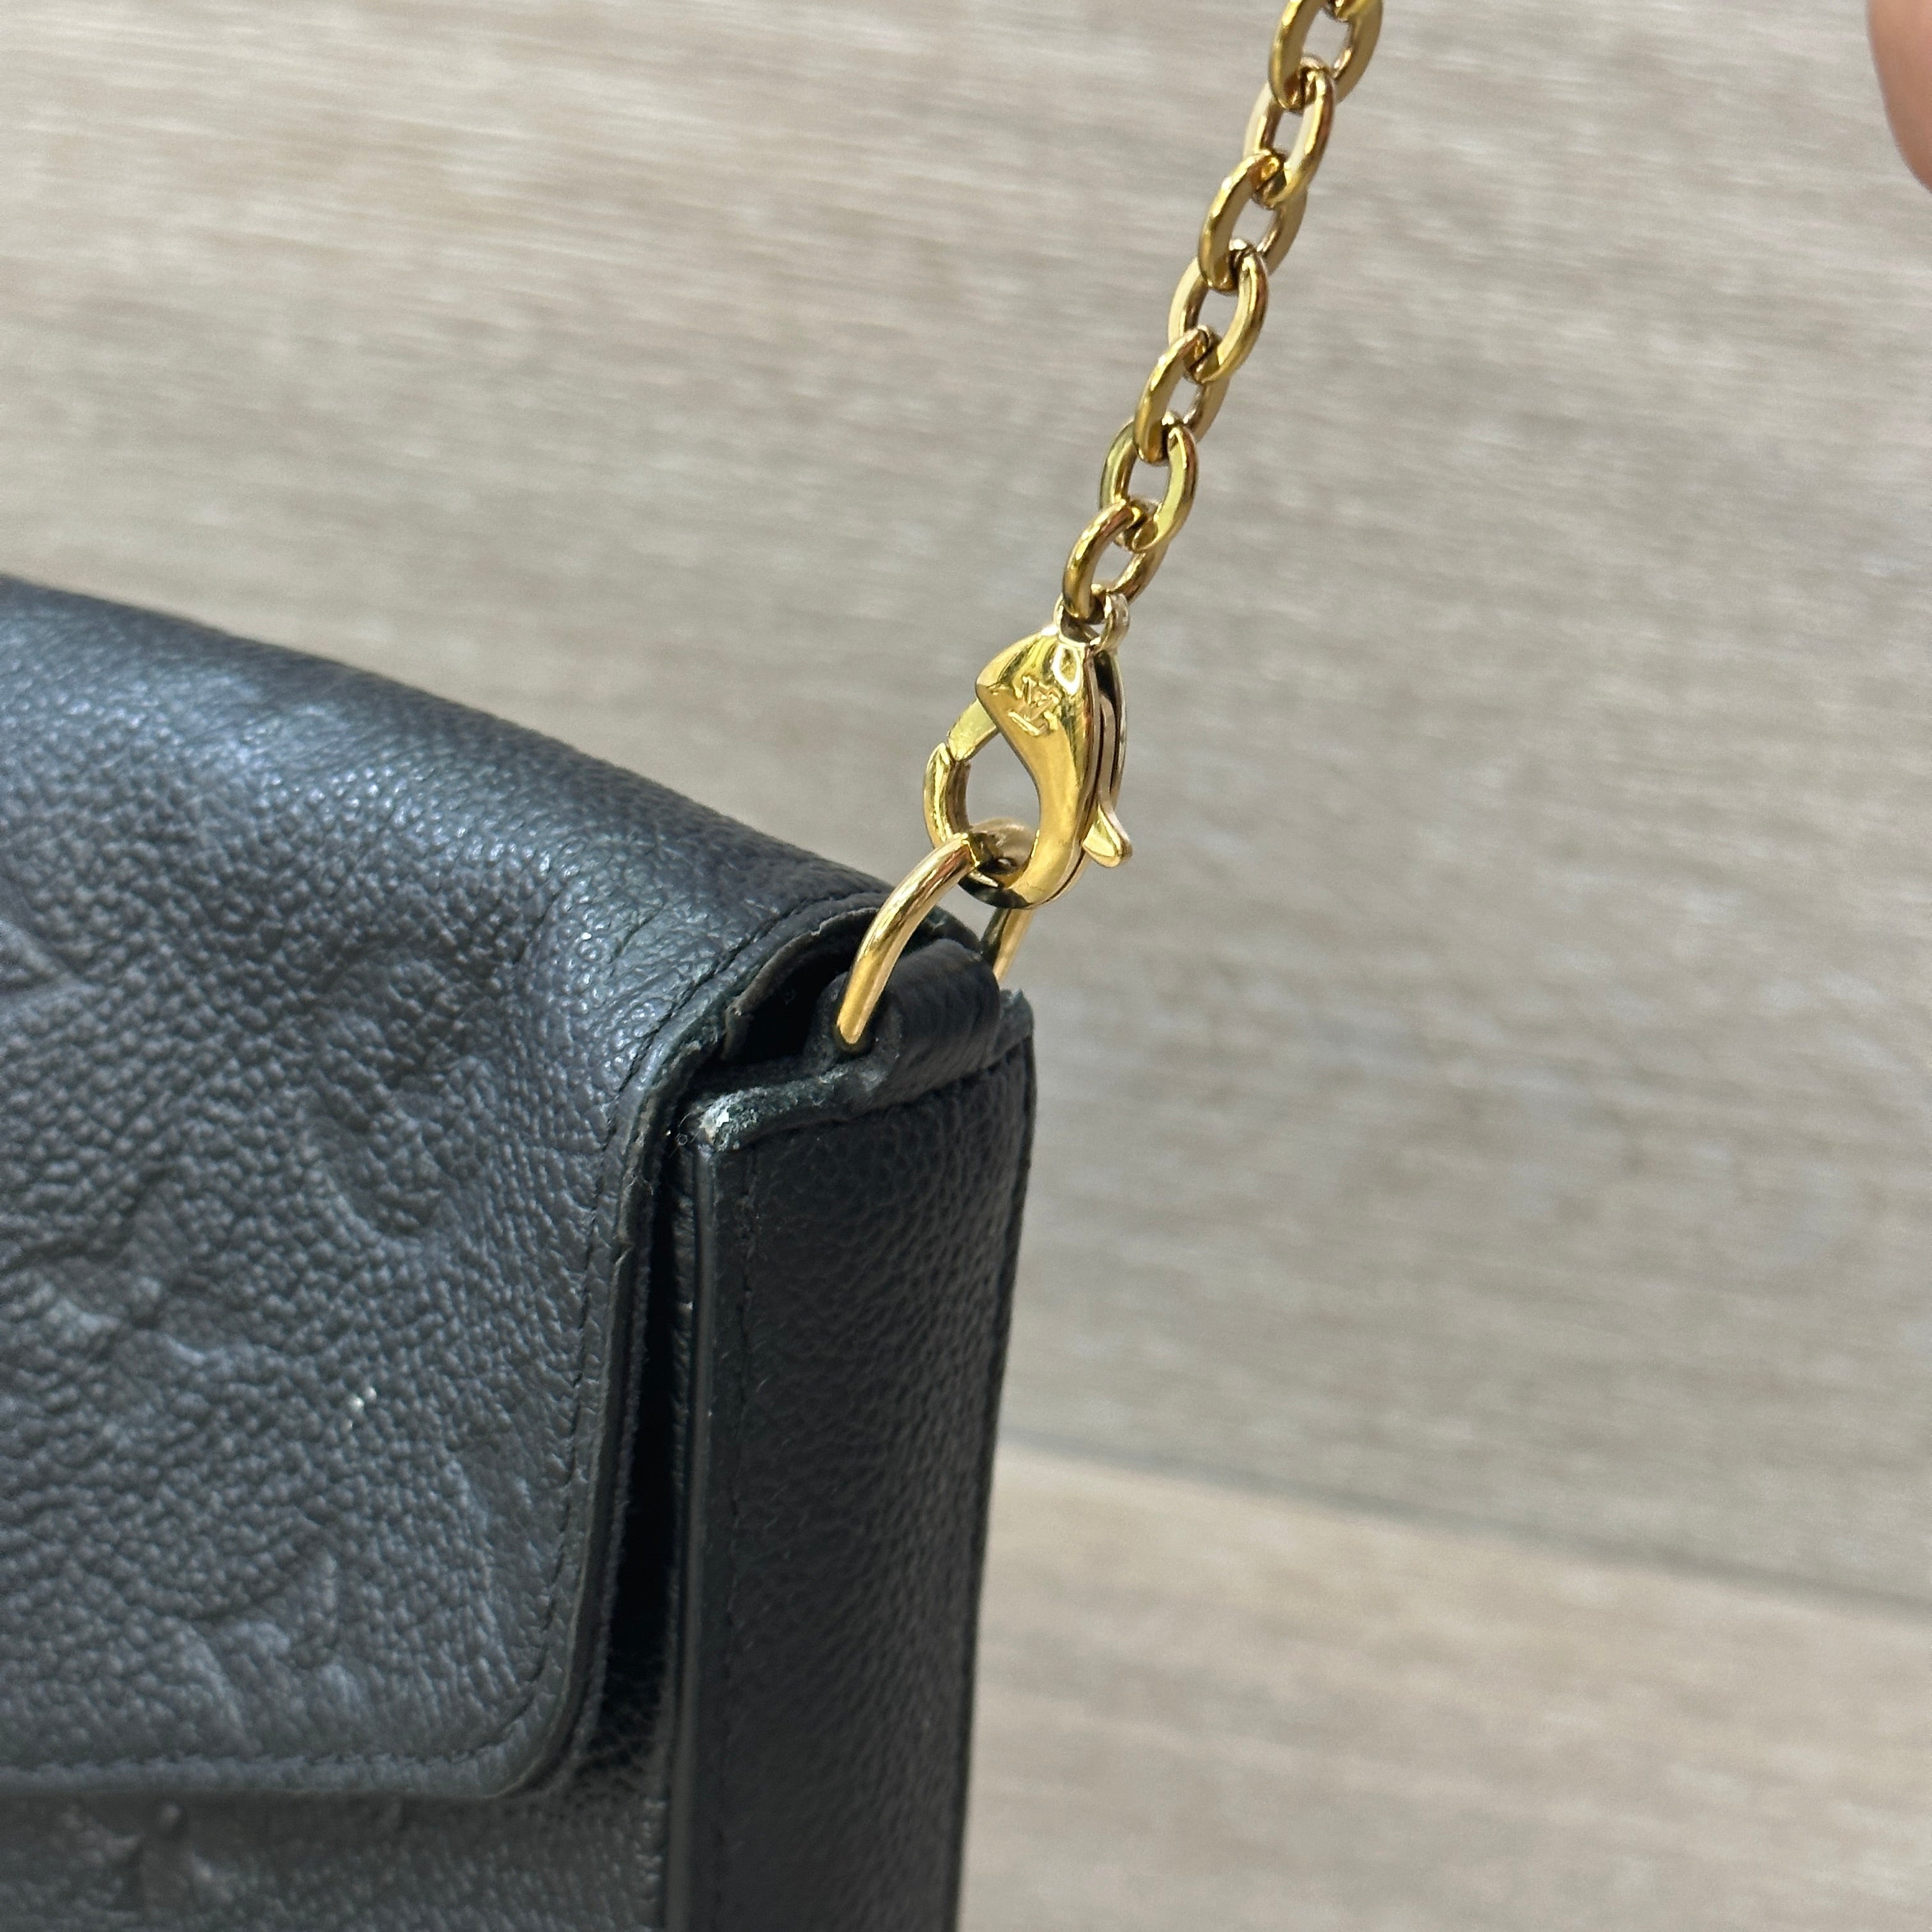 louis vuitton black bag with gold chain